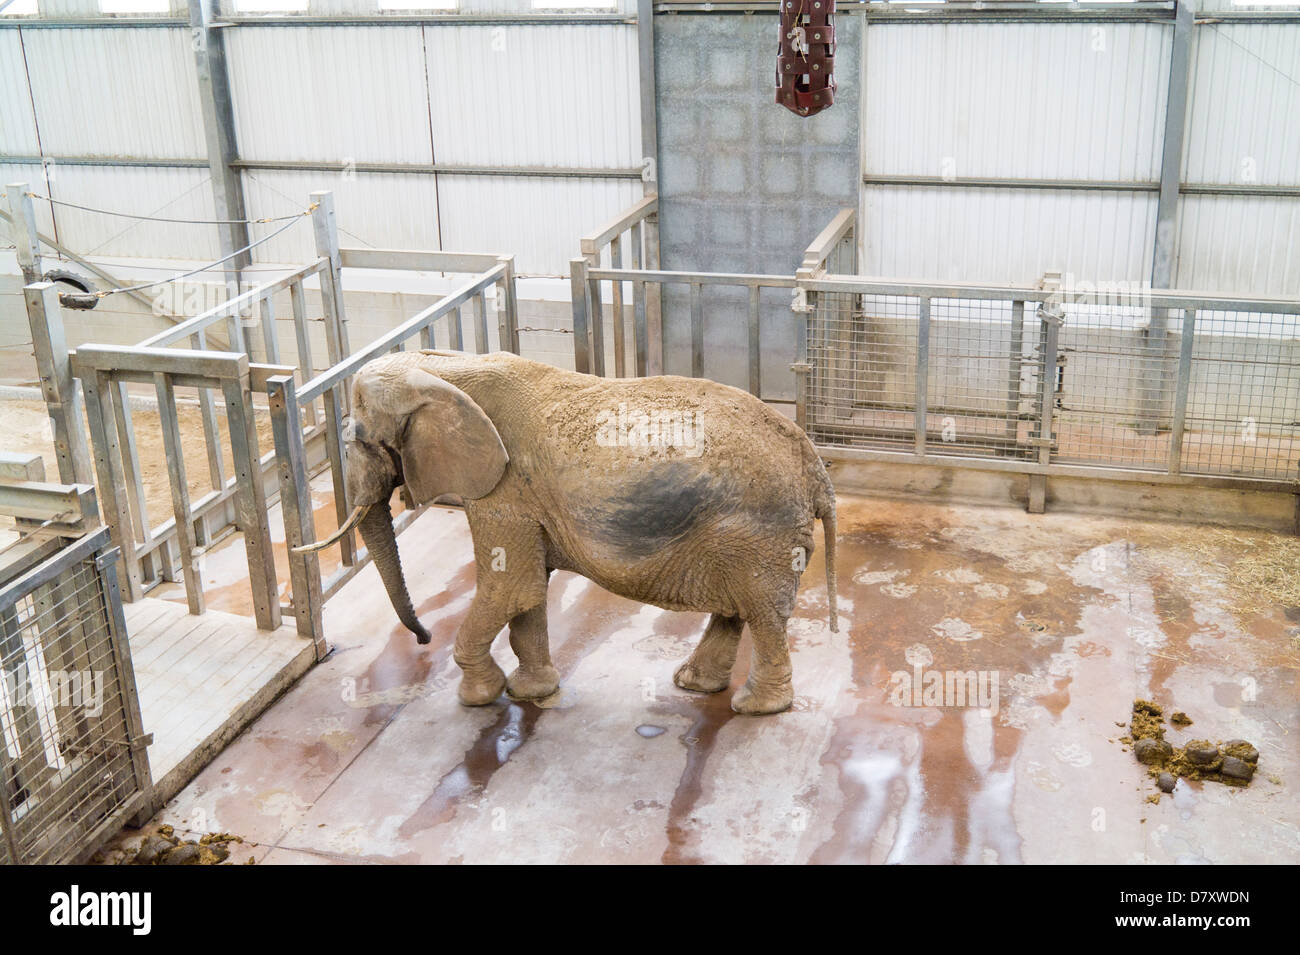 Zoo Elephant indoors Stock Photo